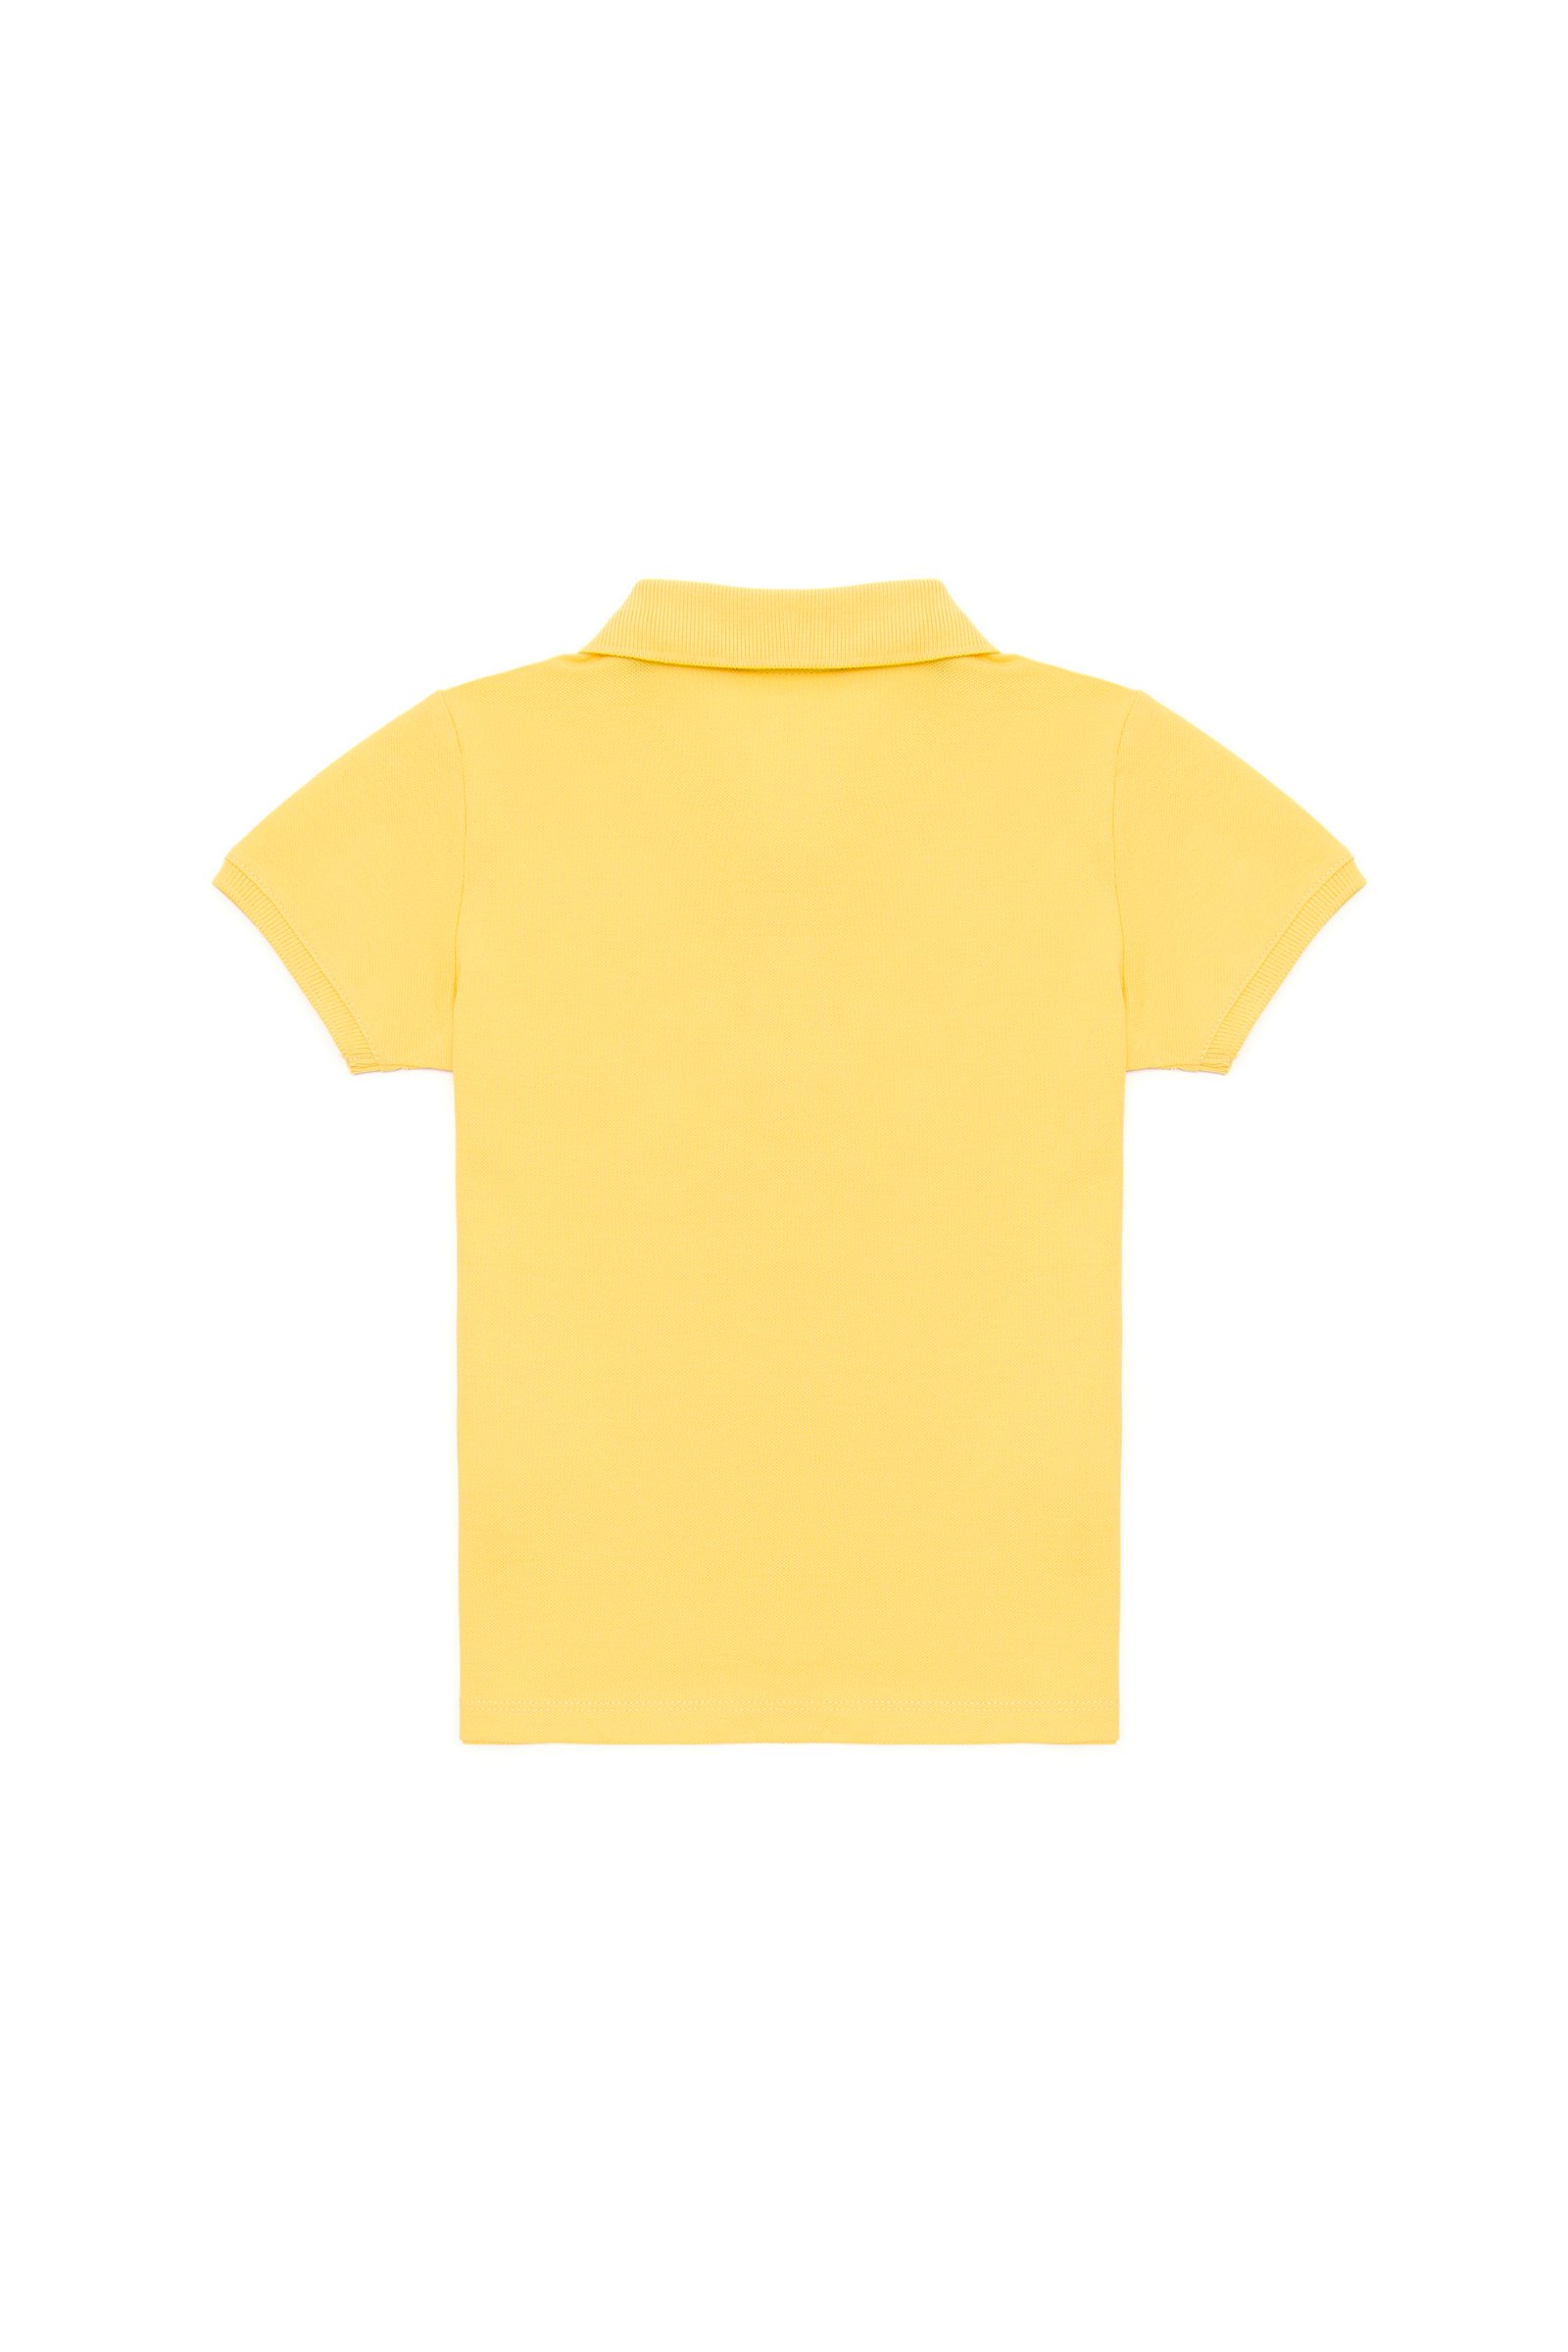 تی شرت  زرد تیره  استاندارد فیت  پسرانه یو اس پولو | US POLO ASSN